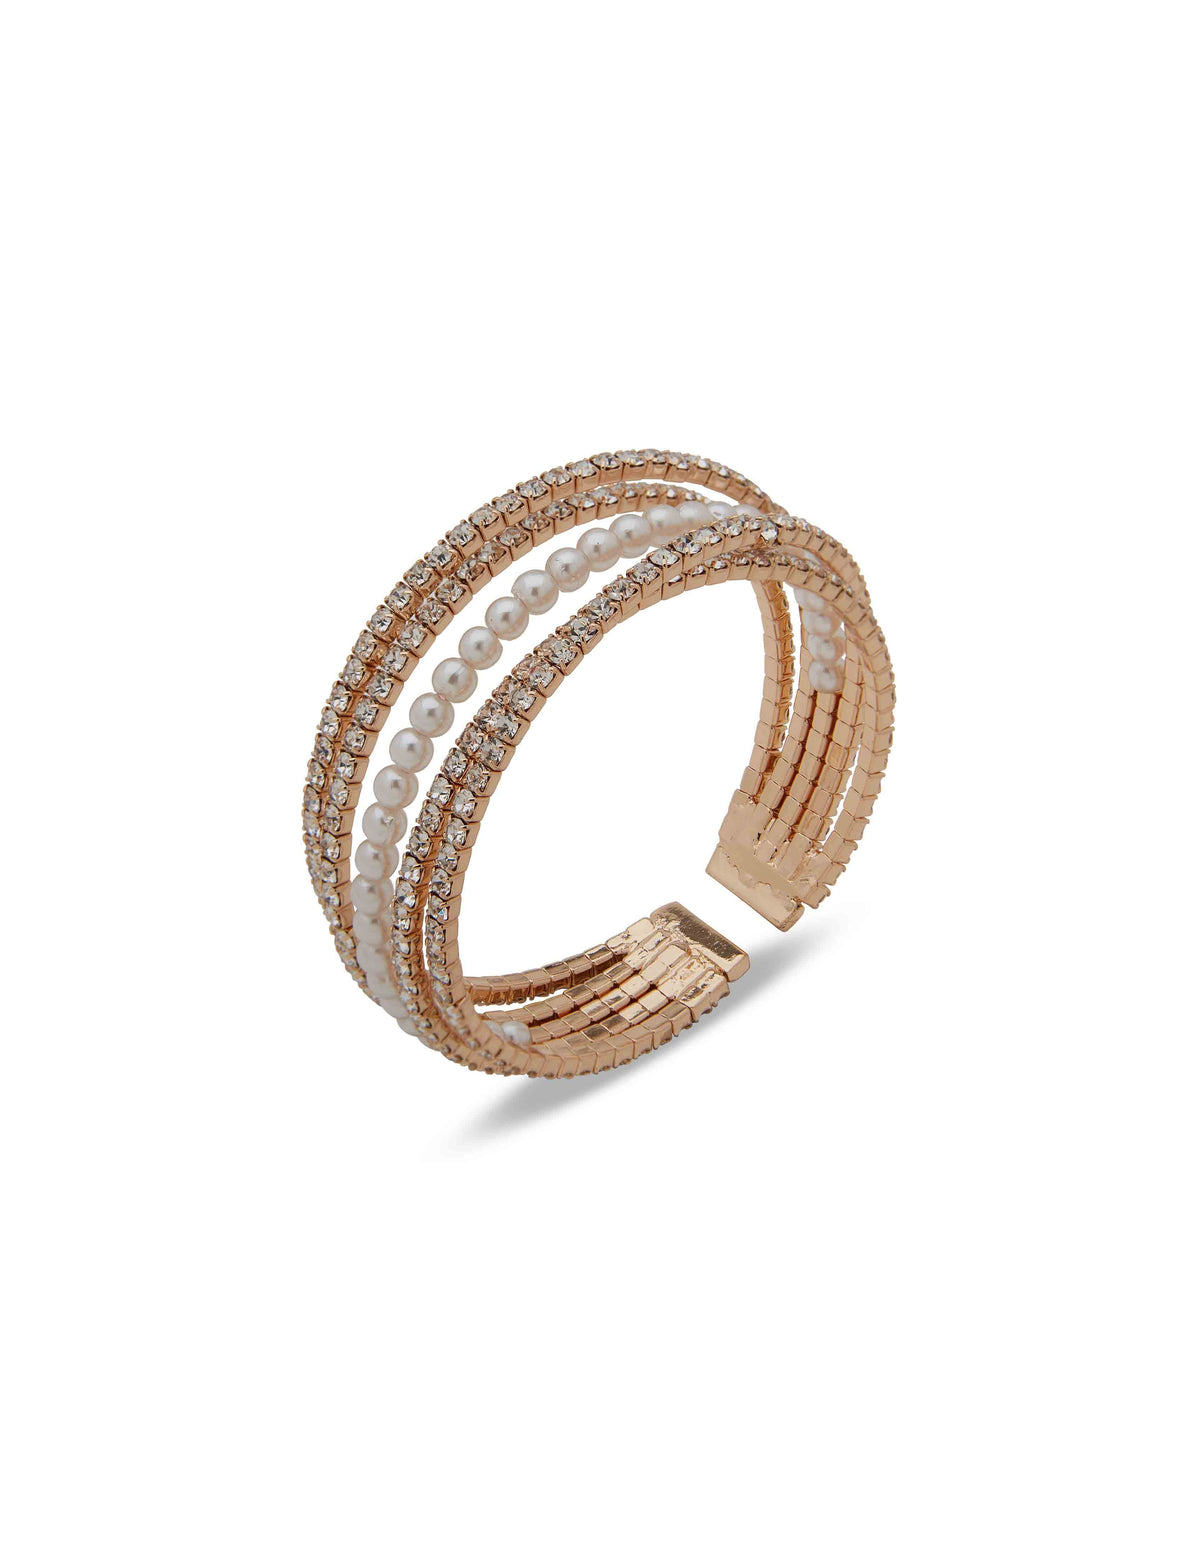 Anne Klein Gold Tone Crisscross Stone Coil Bracelet in Gift Box